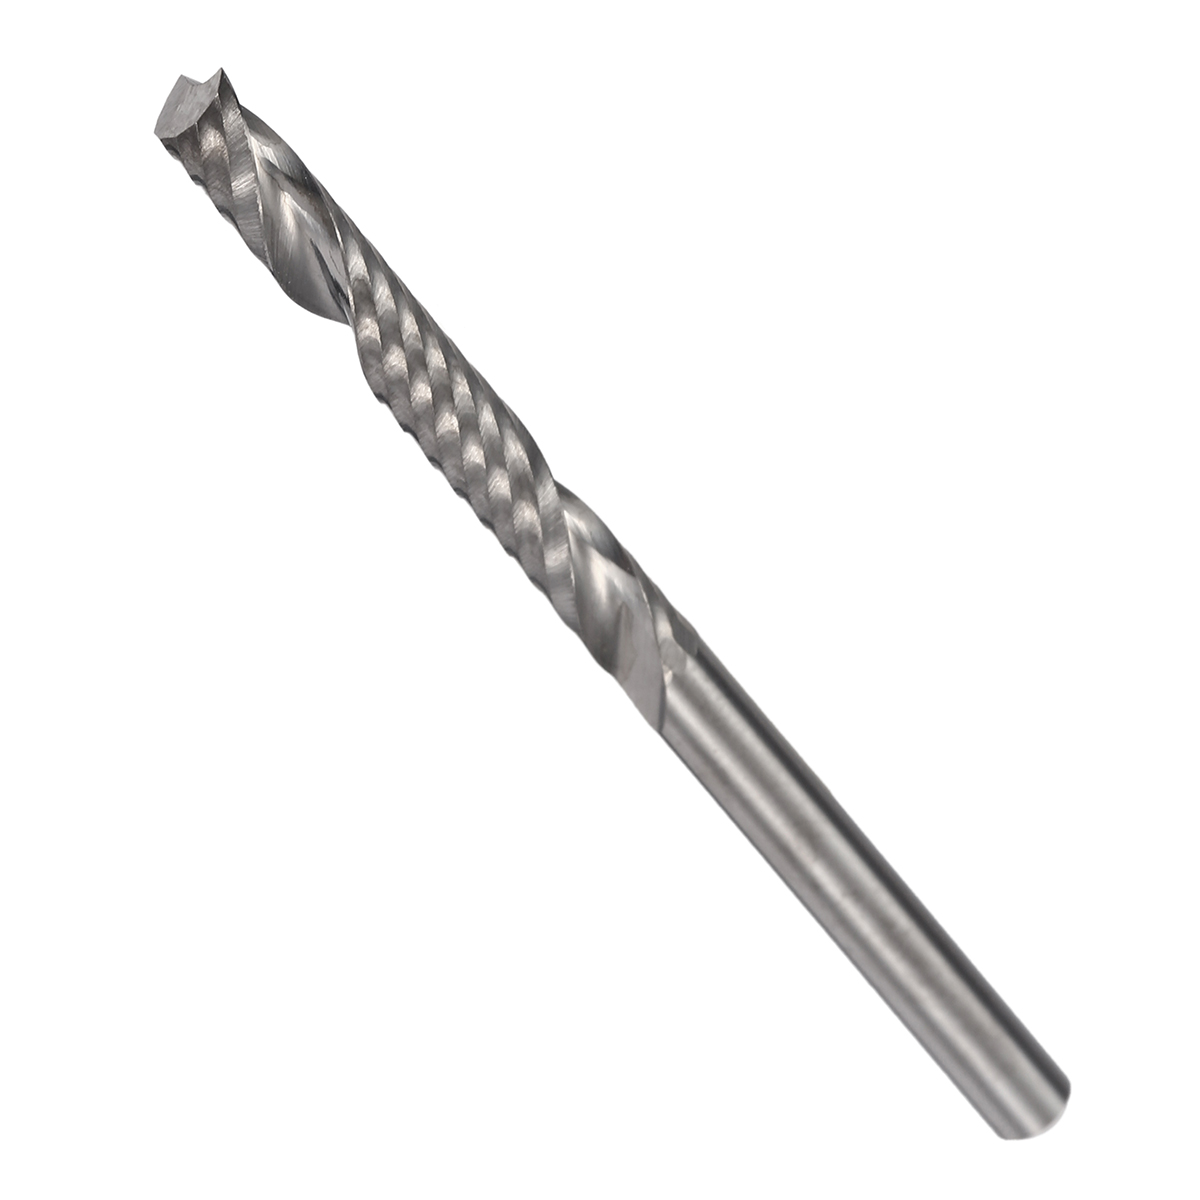 Drillpro-DB-M7-10pcs-18-Inch-Shank-End-Mill-Cutter-1-Flute-Carbide-Spiral-Milling-Cutter-1033261-7